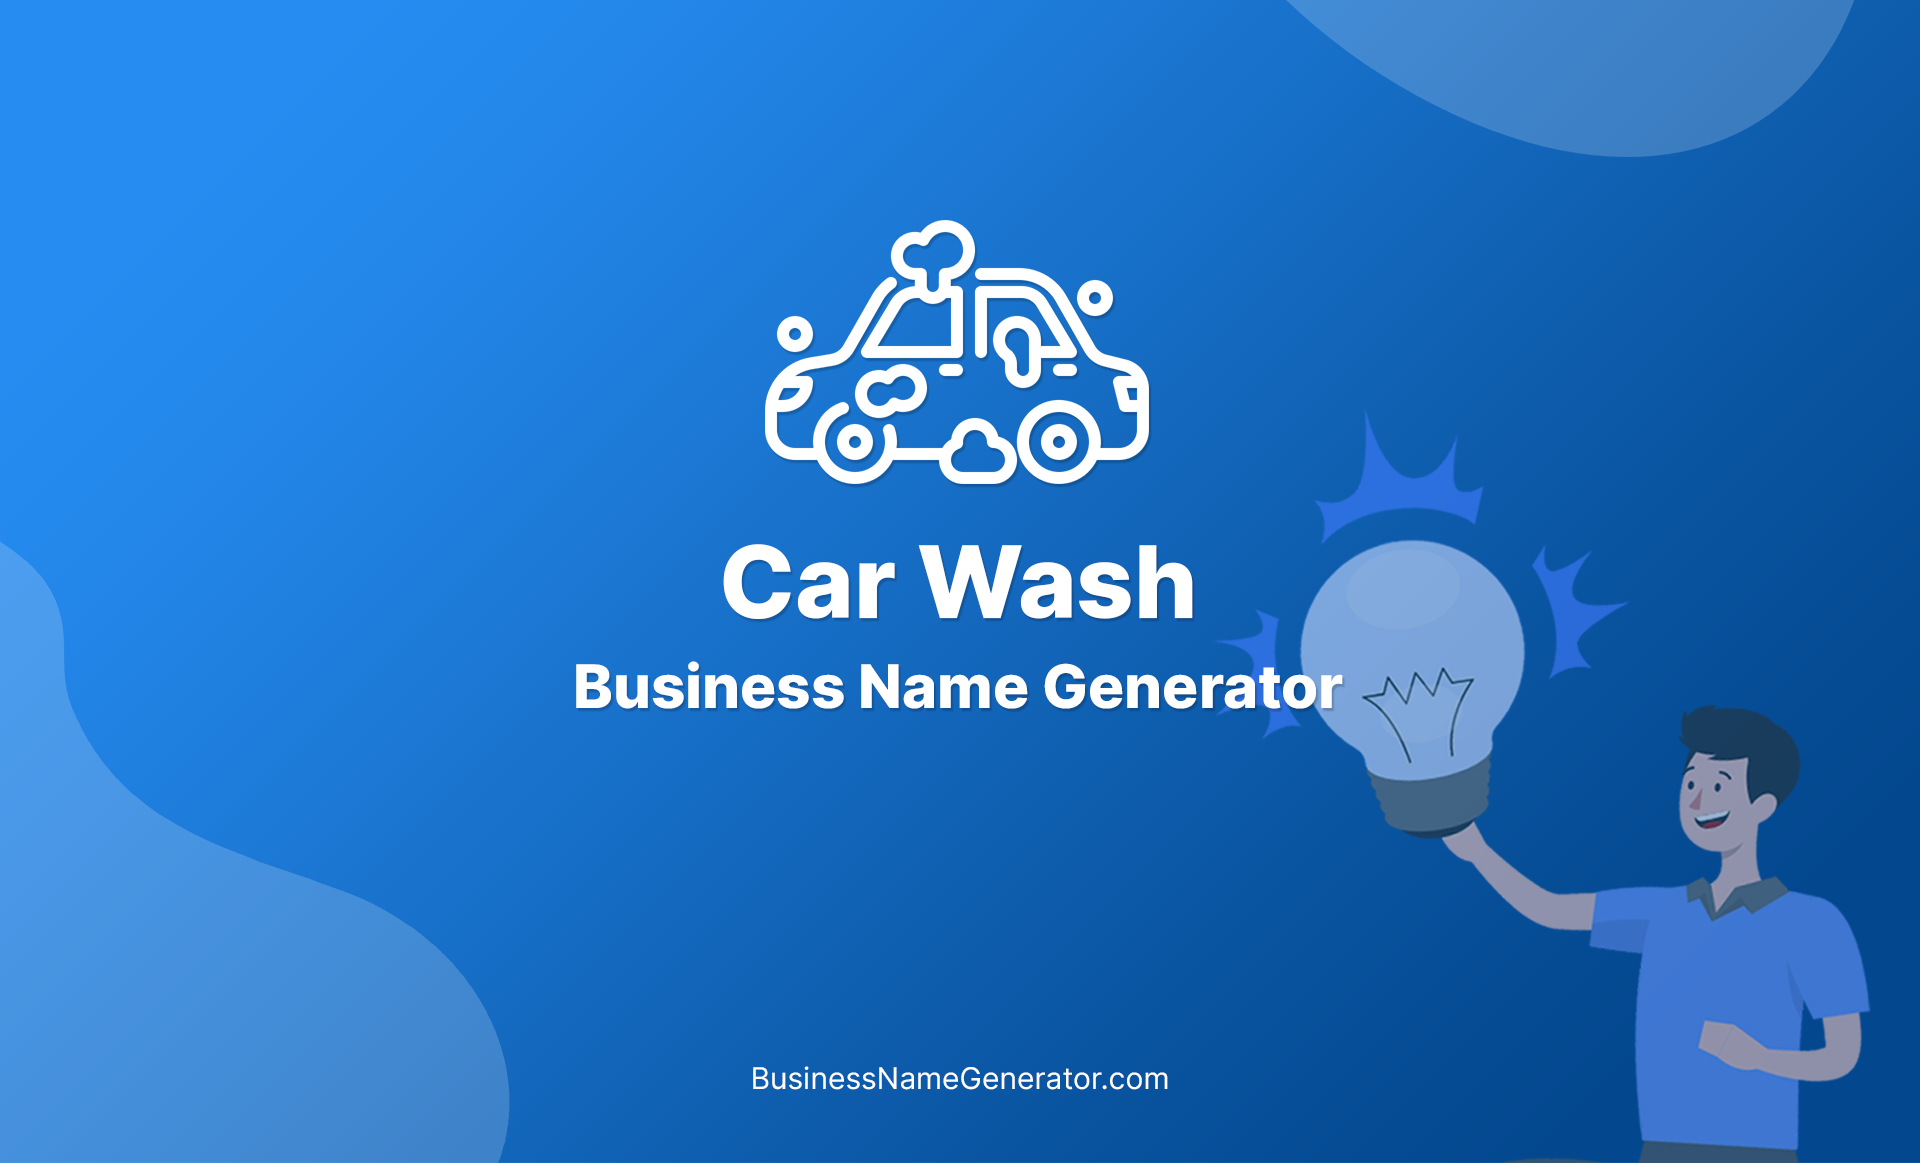 Car Wash Business Name Generator